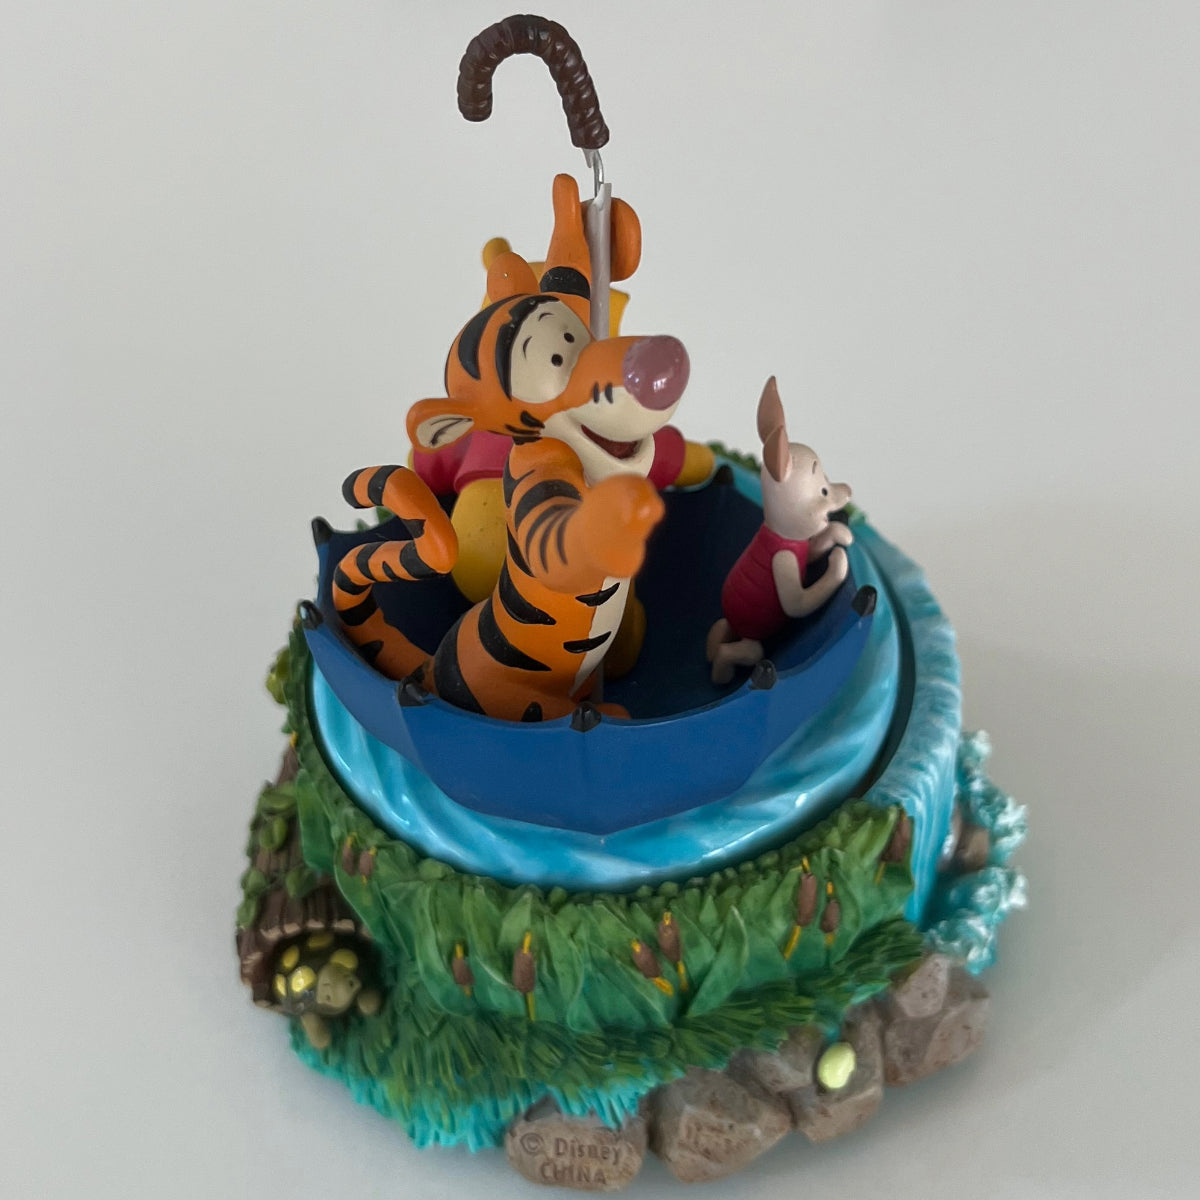 Very rare VTG Disney Winnie The Pooh in Umbrella Floating Music Box